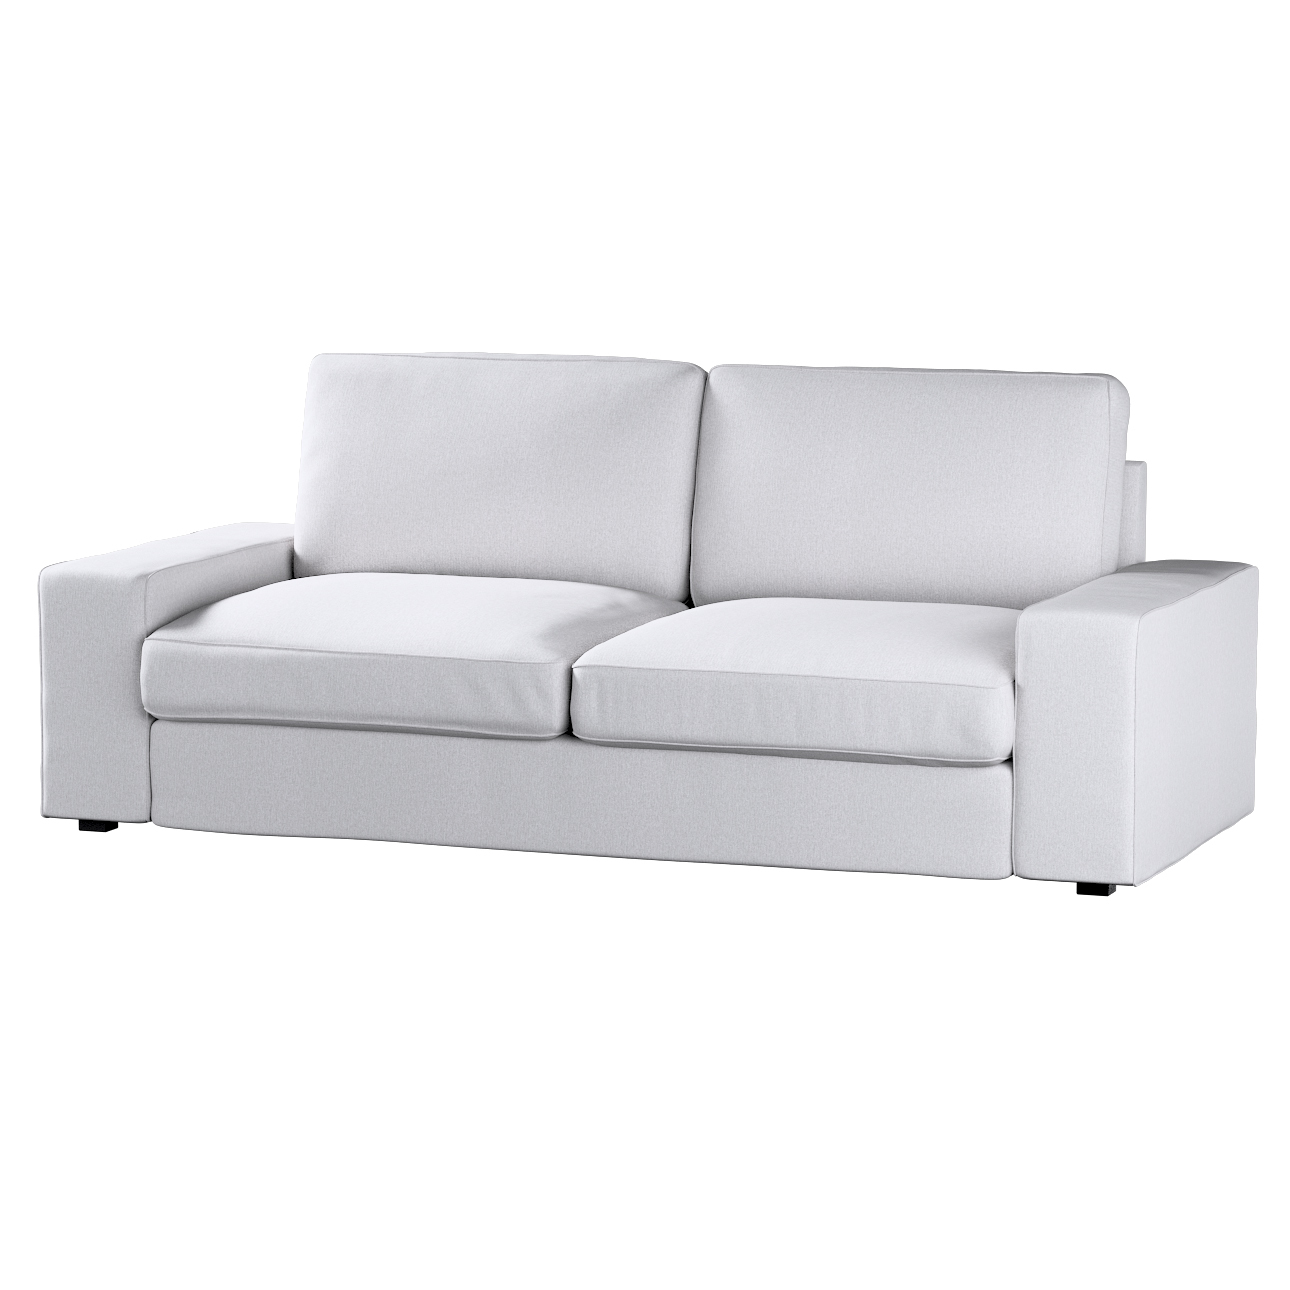 Bezug für Kivik 3-Sitzer Sofa, hellgrau, Bezug für Sofa Kivik 3-Sitzer, Ams günstig online kaufen